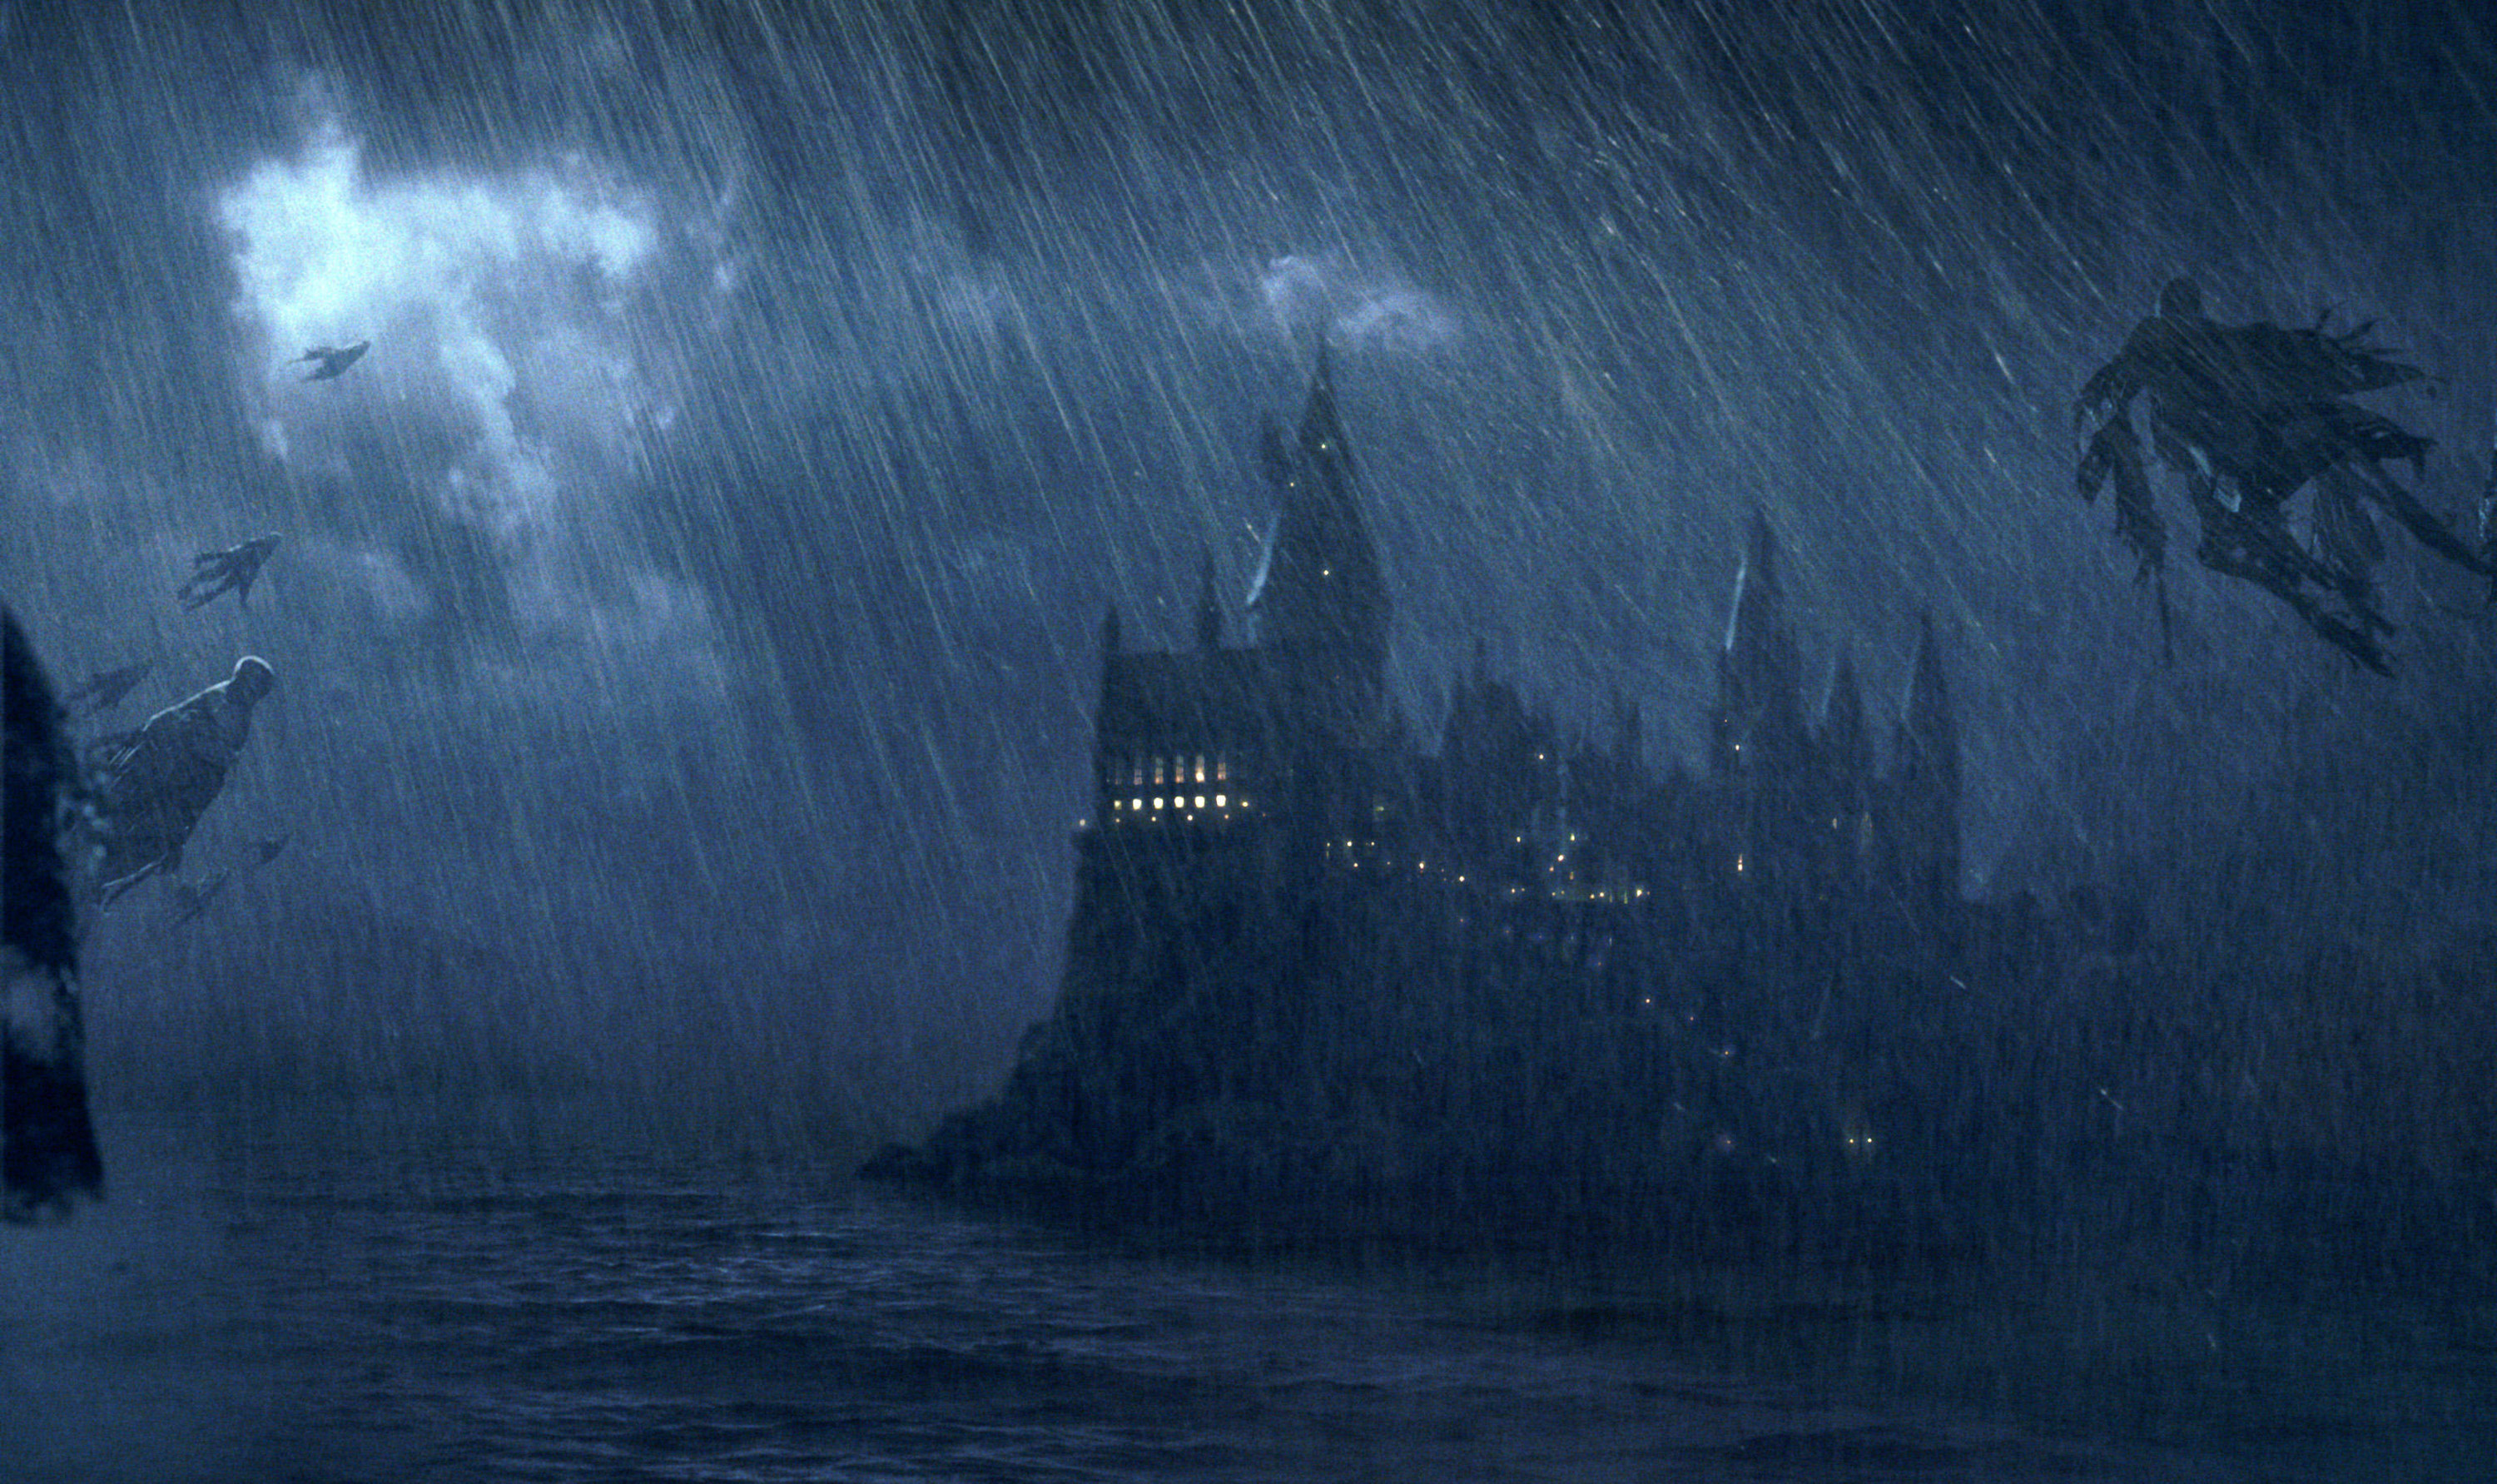 Flying hooded, wraithlike figures descend upon Hogwarts Castle on a rainy evening